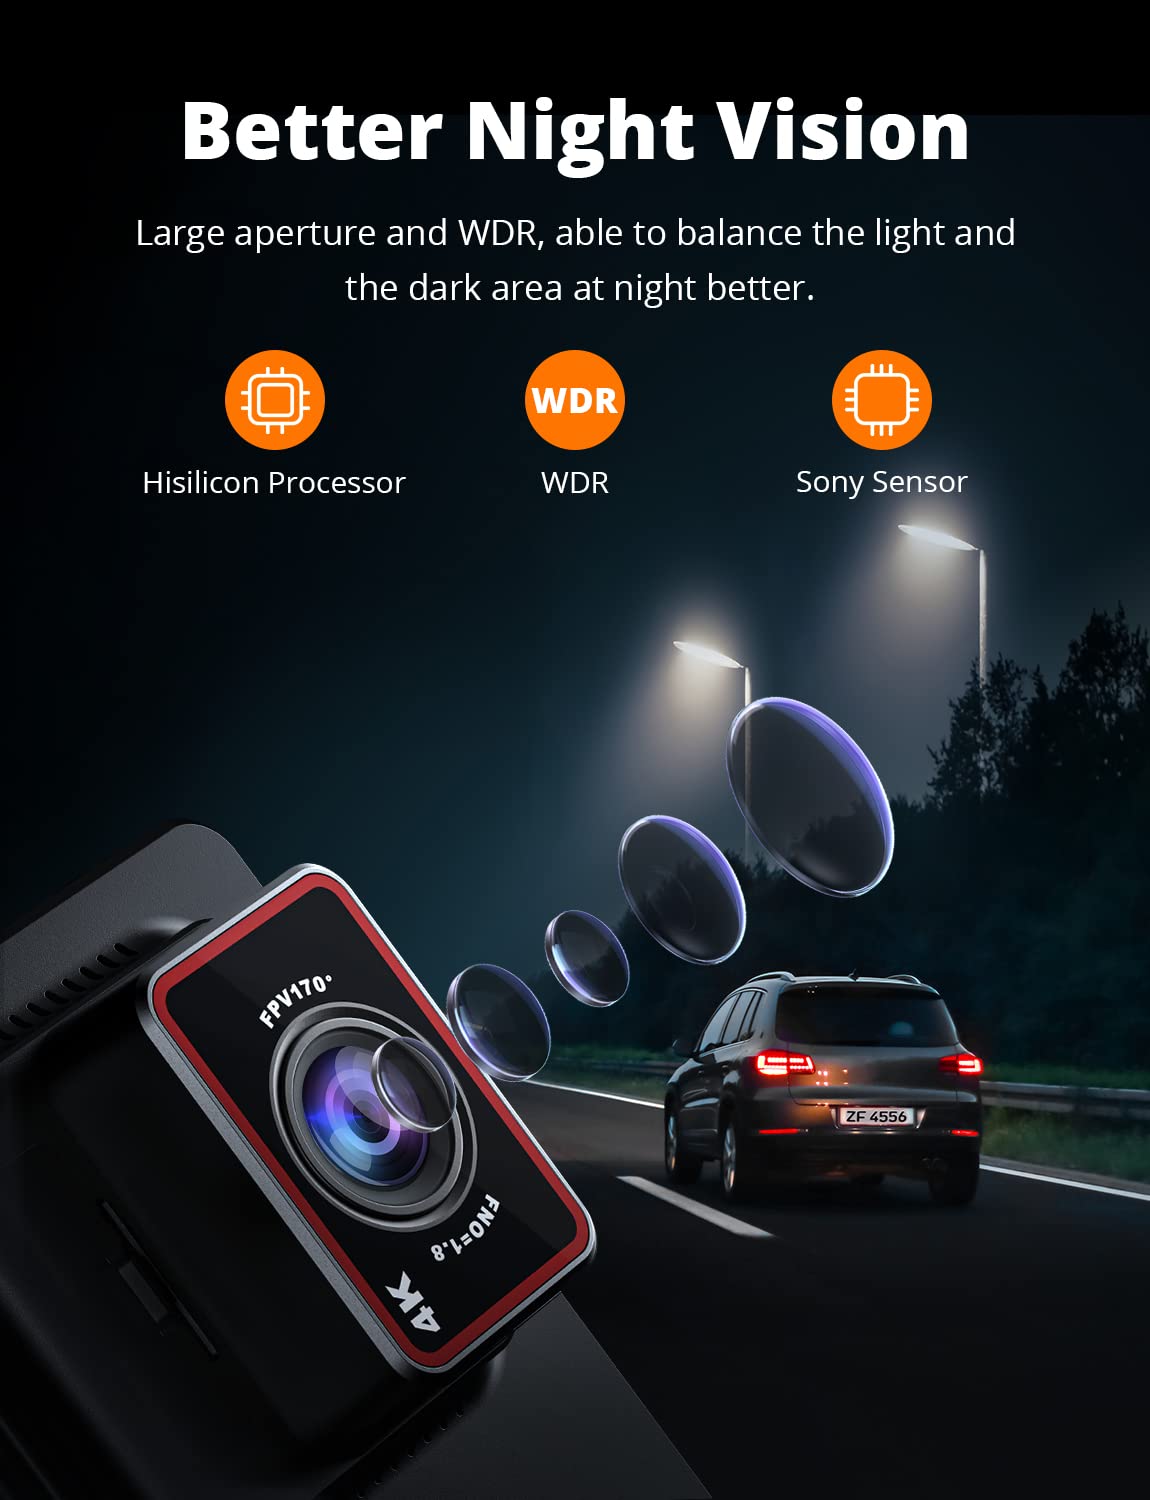 Kingslim D4 4K Dual Dash Cam with Built-in WiFi GPS, Front 4K/2.5K Rear 1080P Dual Dash Camera for Cars, 3